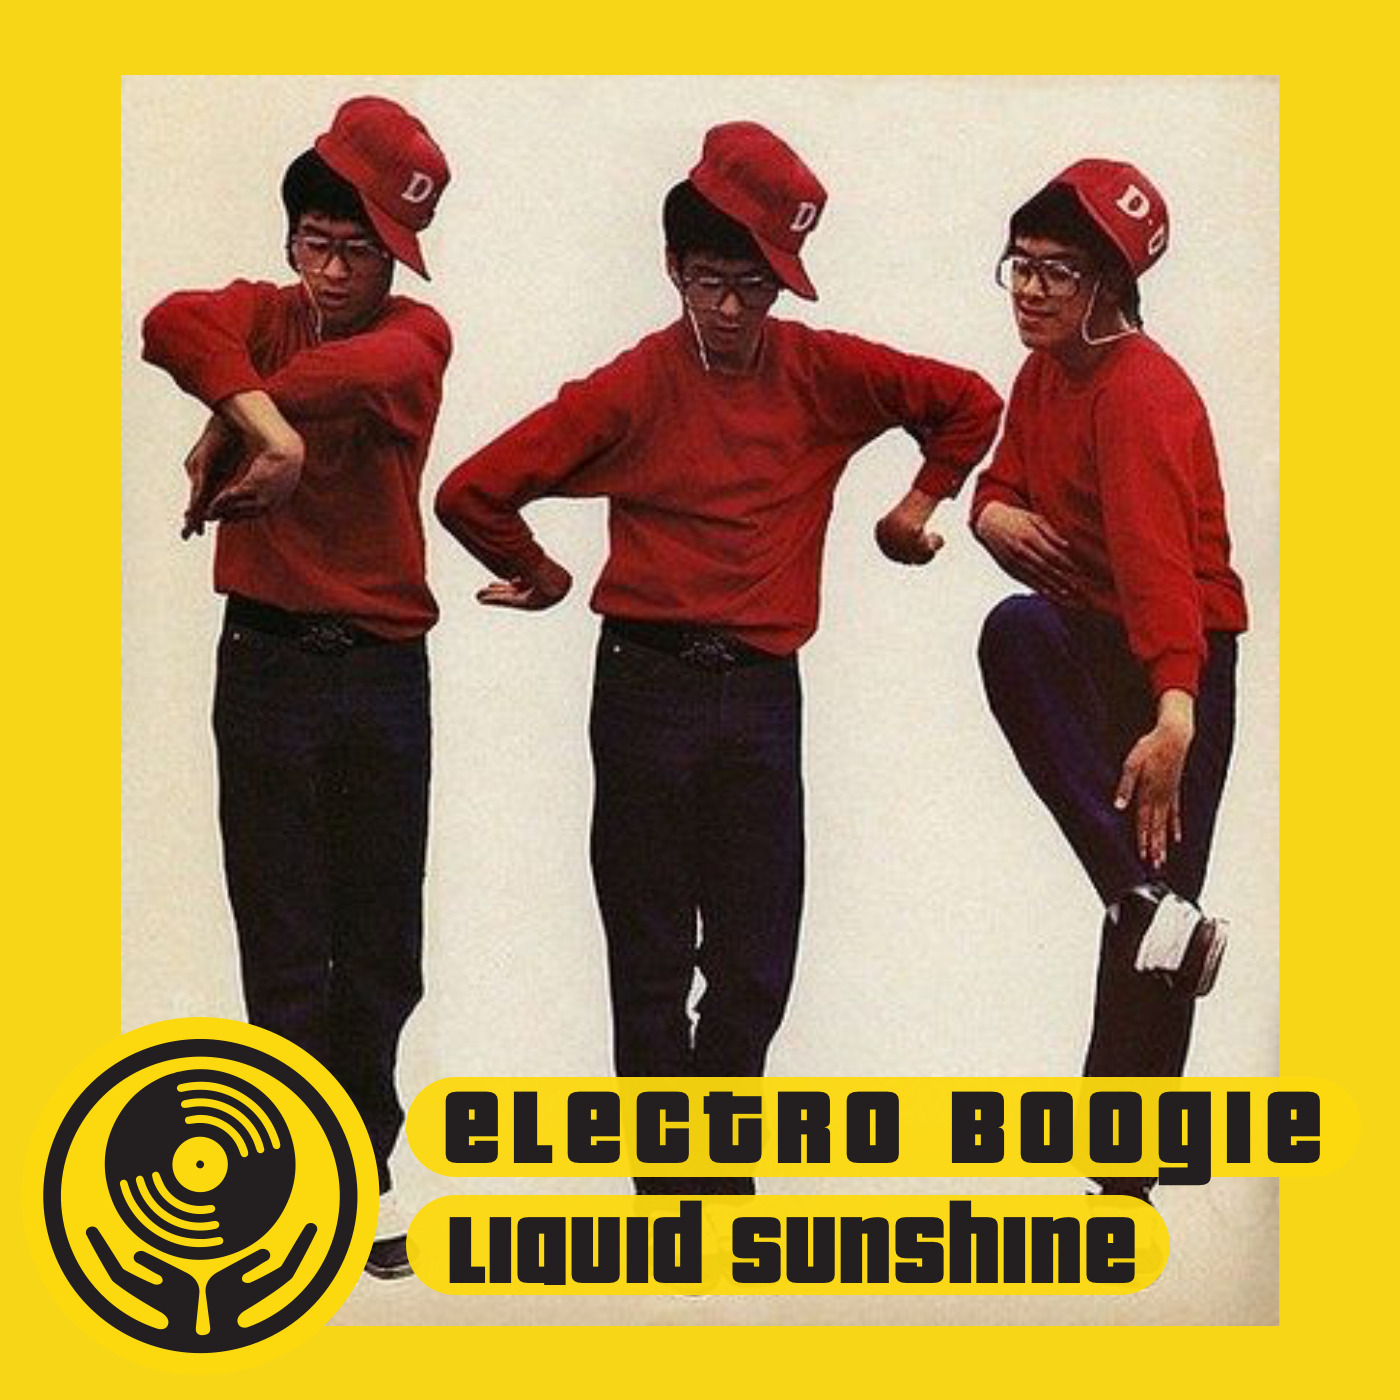 Electro Boogie Bass Bombs - Liquid Sunshine @ The Face Radio - Show #105 - 26-04-2022